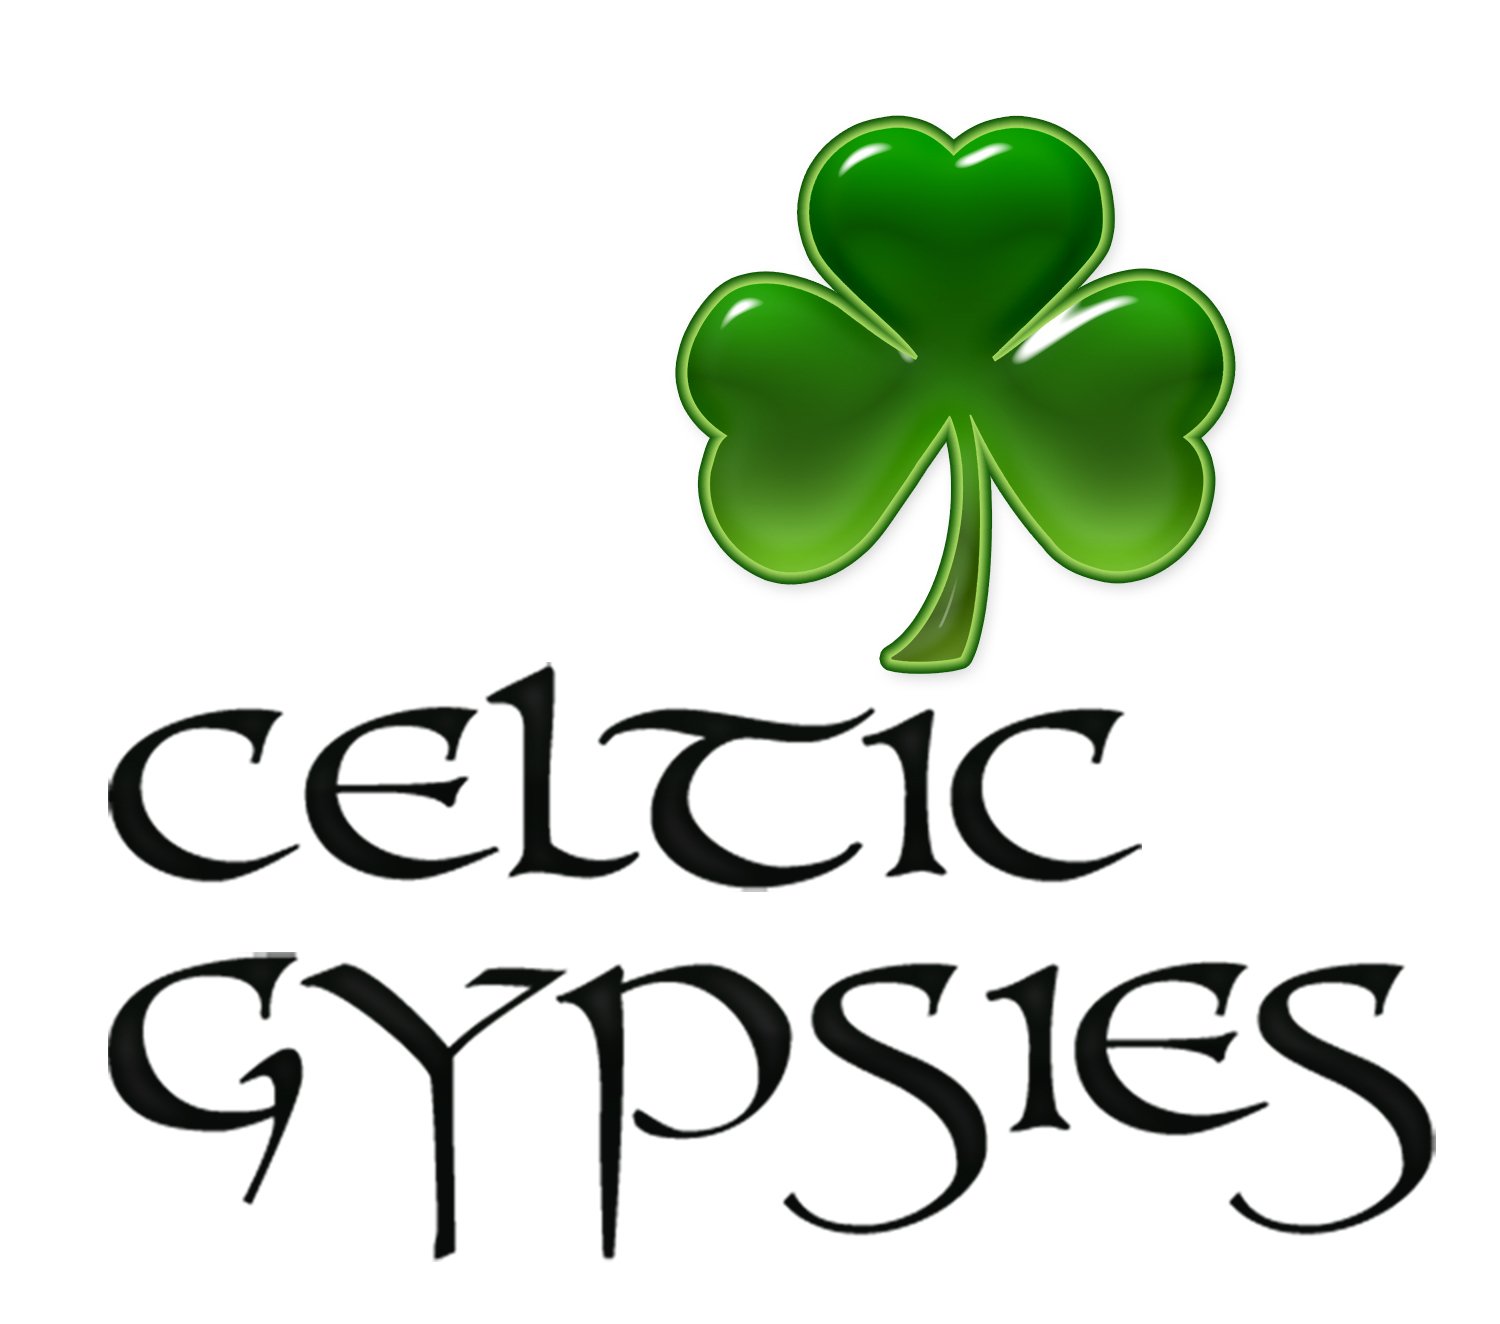 are all celtics in ireland gpsy